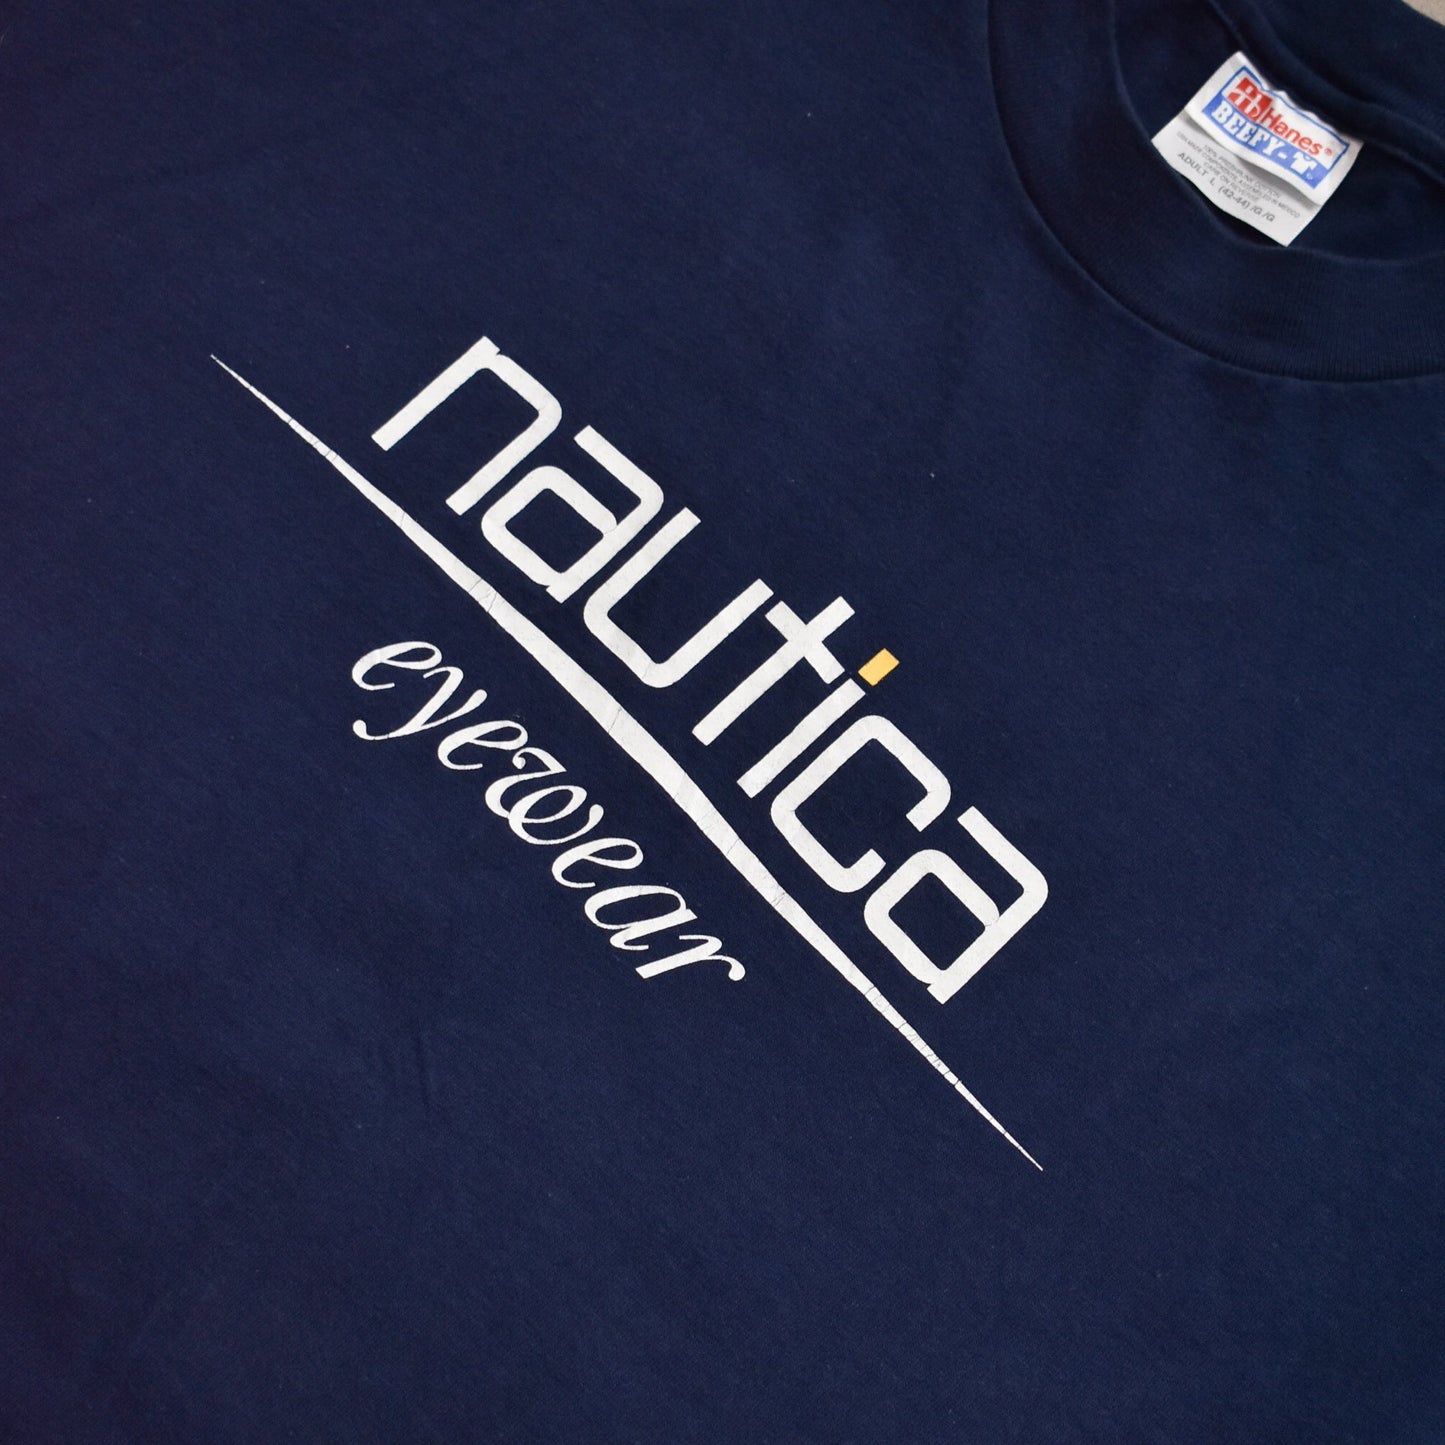 1990s Nautica Eyewear Navy T Shirt - L sullivansvintage